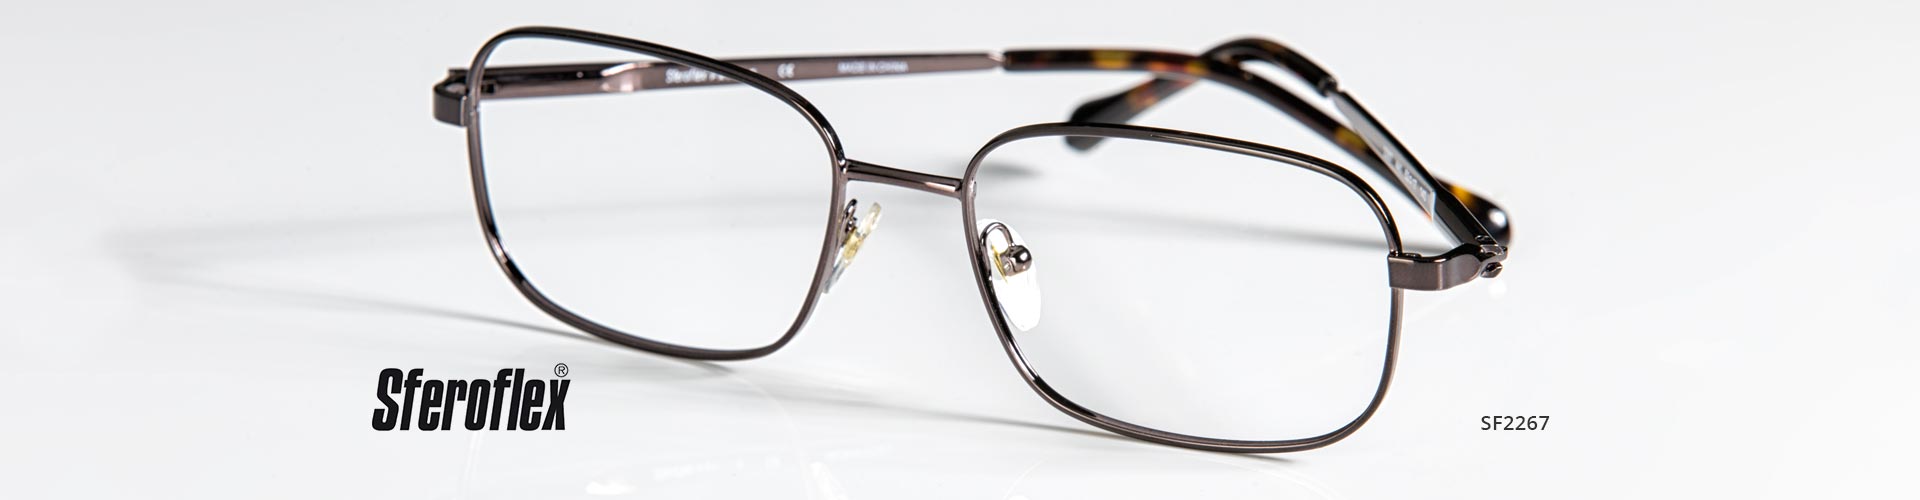 Shop Sferoflex Eyeglasses - model SF2267 featured